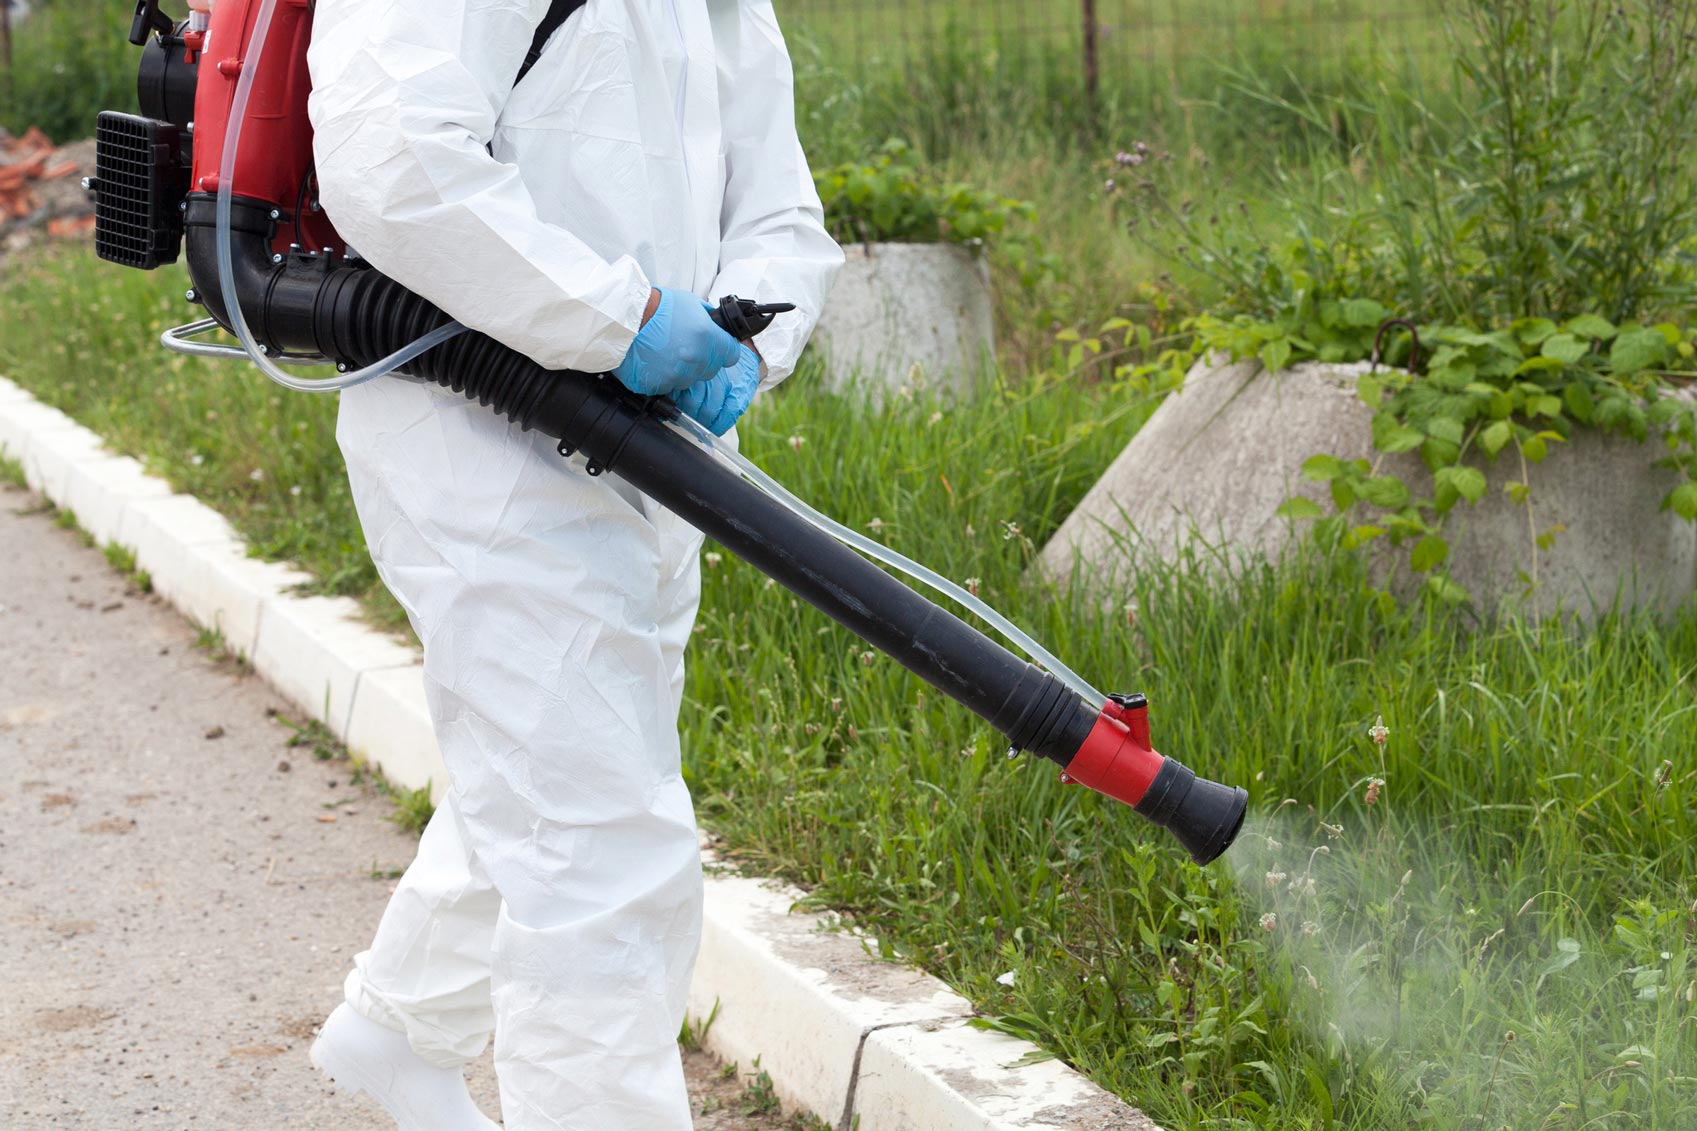 Pest Control Worker Spraying Insecticide - Warren, MI - Maple Lane Pest Control